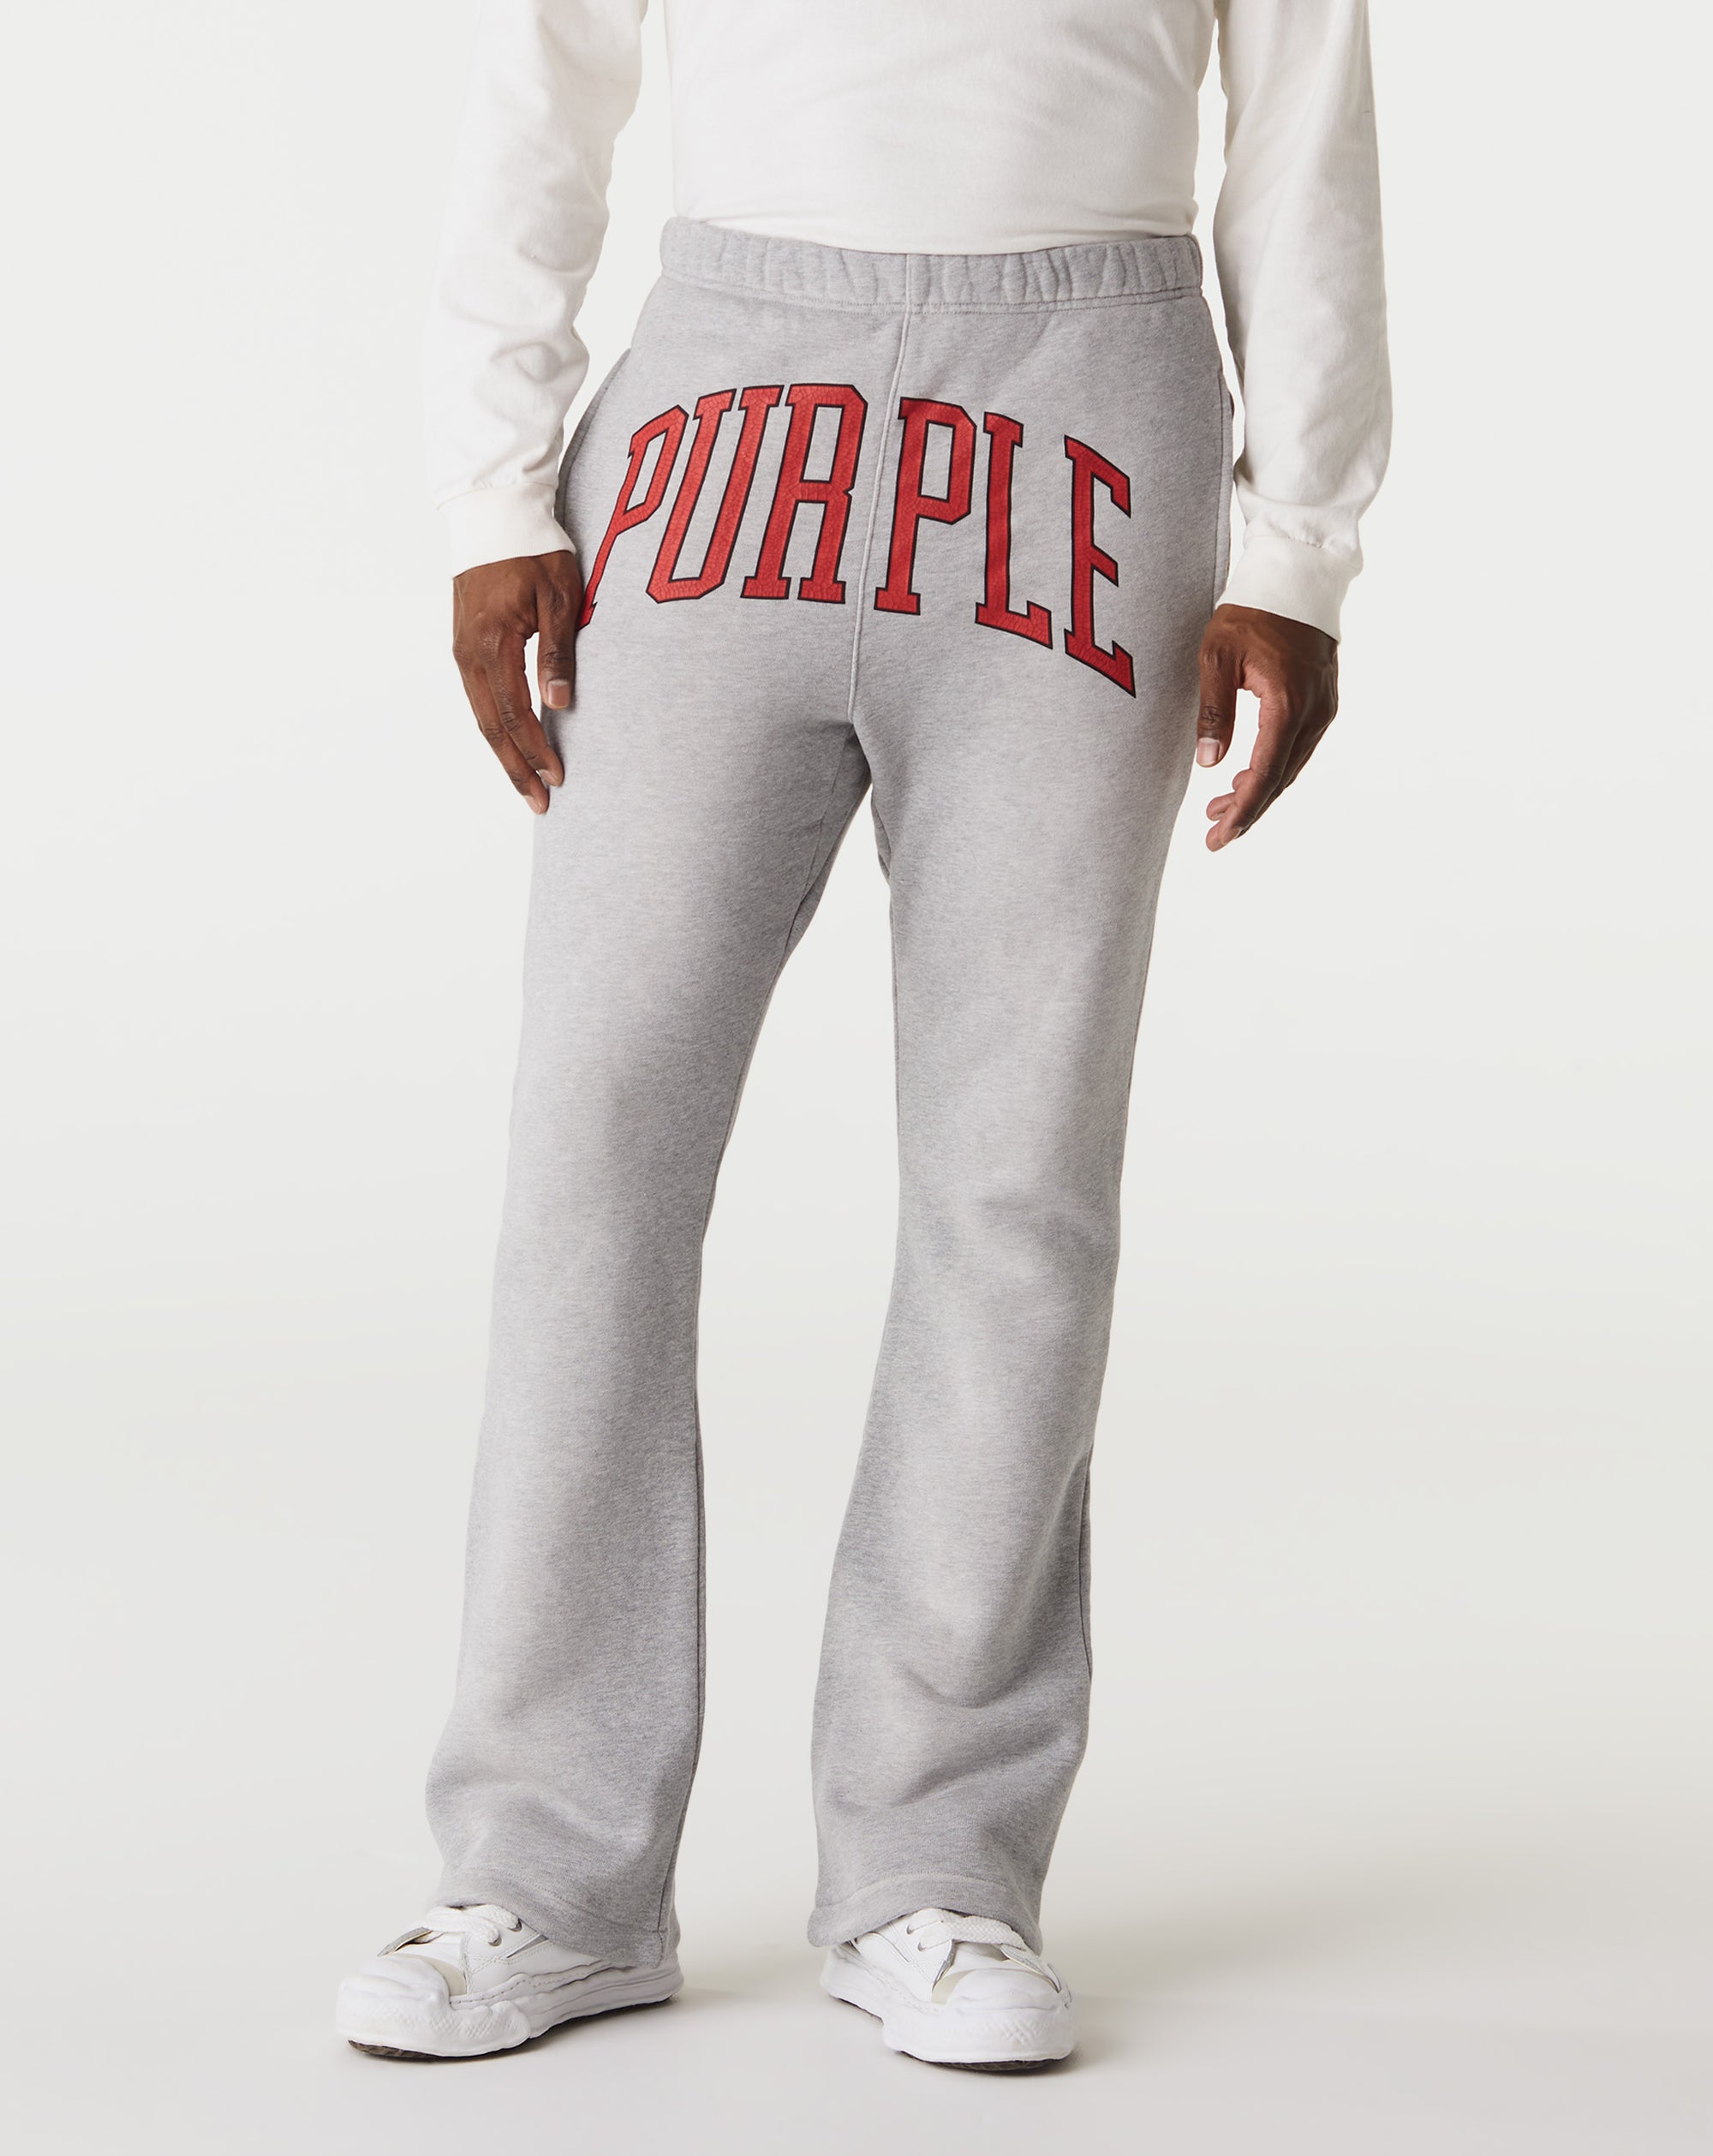 Purple Brand Heavyweight Fleece Flared Pants - Rule of Next Apparel